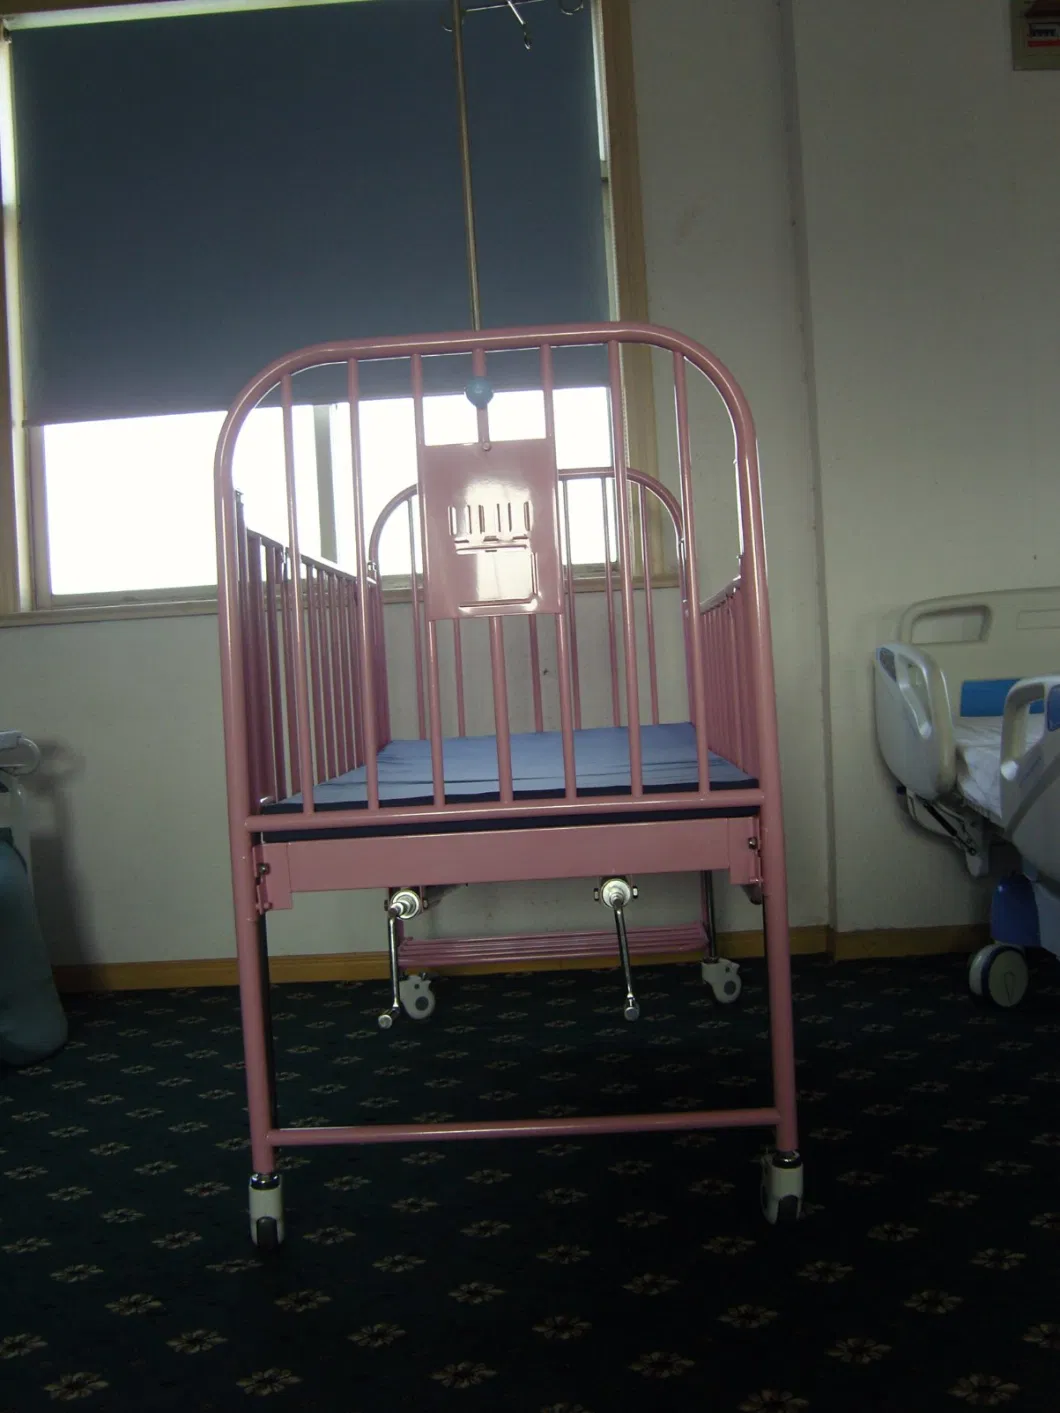 Newborn Medical Crib Stainless Steel Pediatric Bed Children Hospital Bed (THR-CB15)